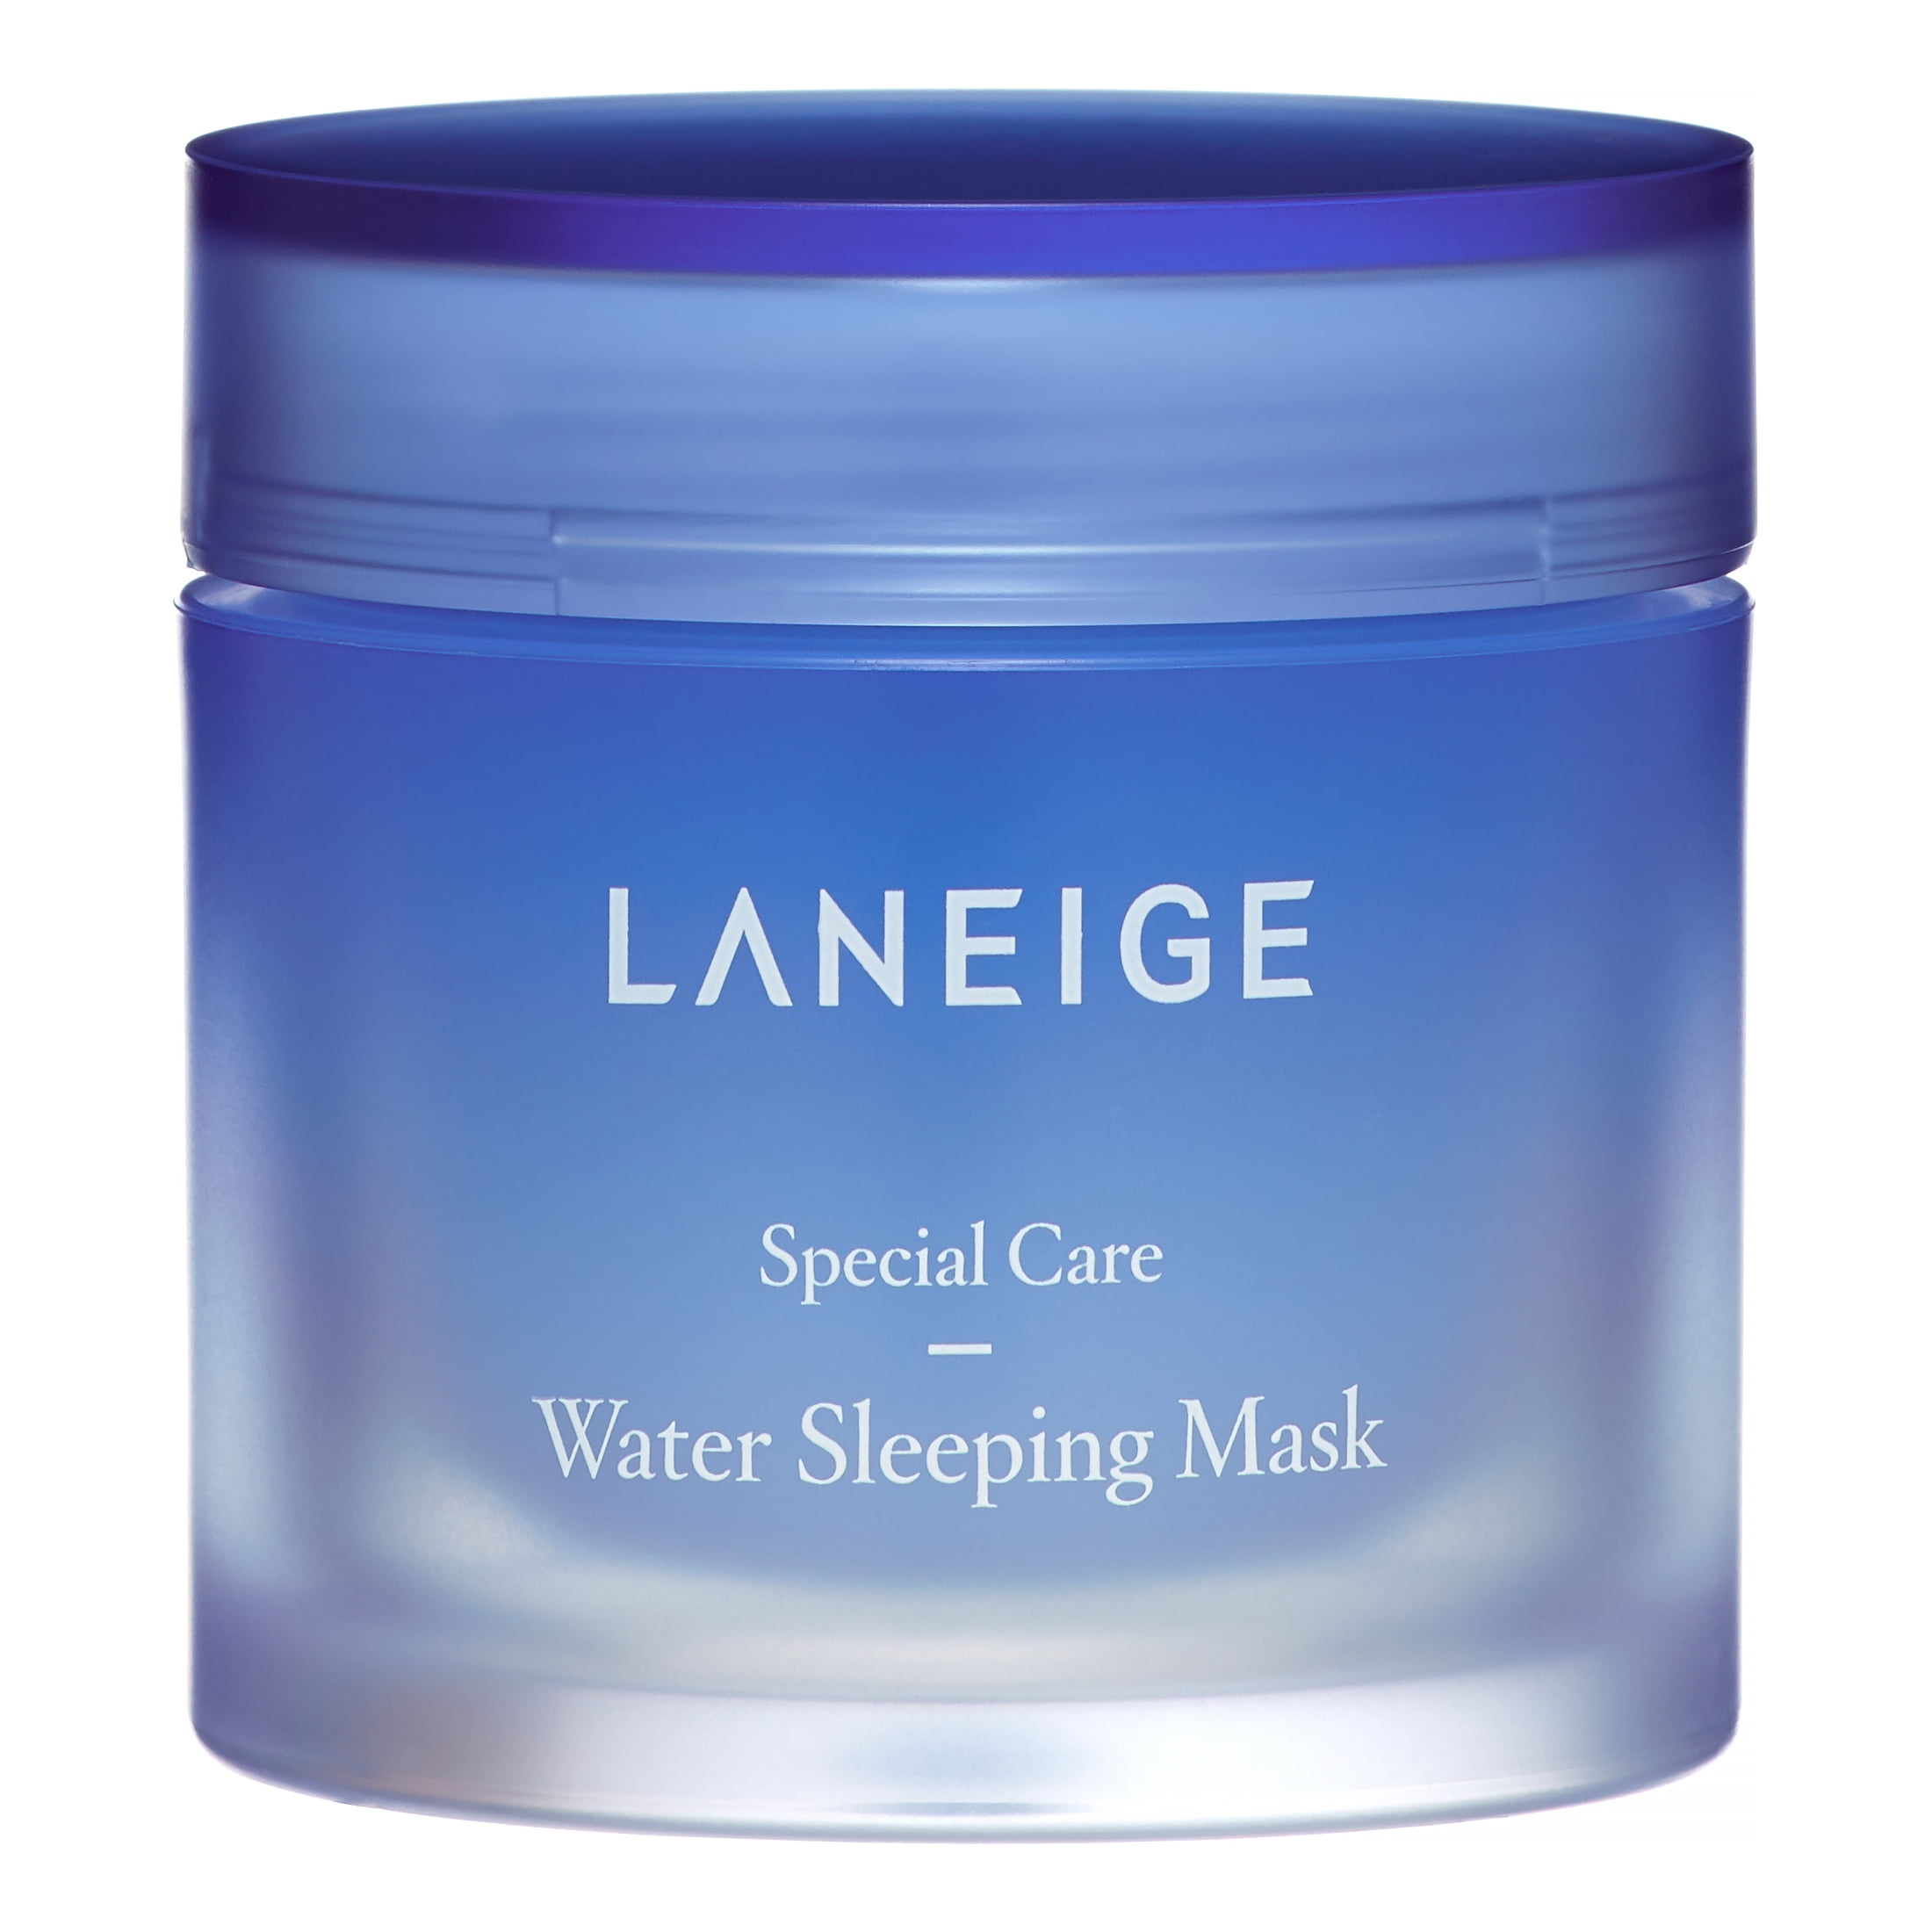 25 Value) Laneige Special Care Water Sleeping Mask, Oz - Walmart.com